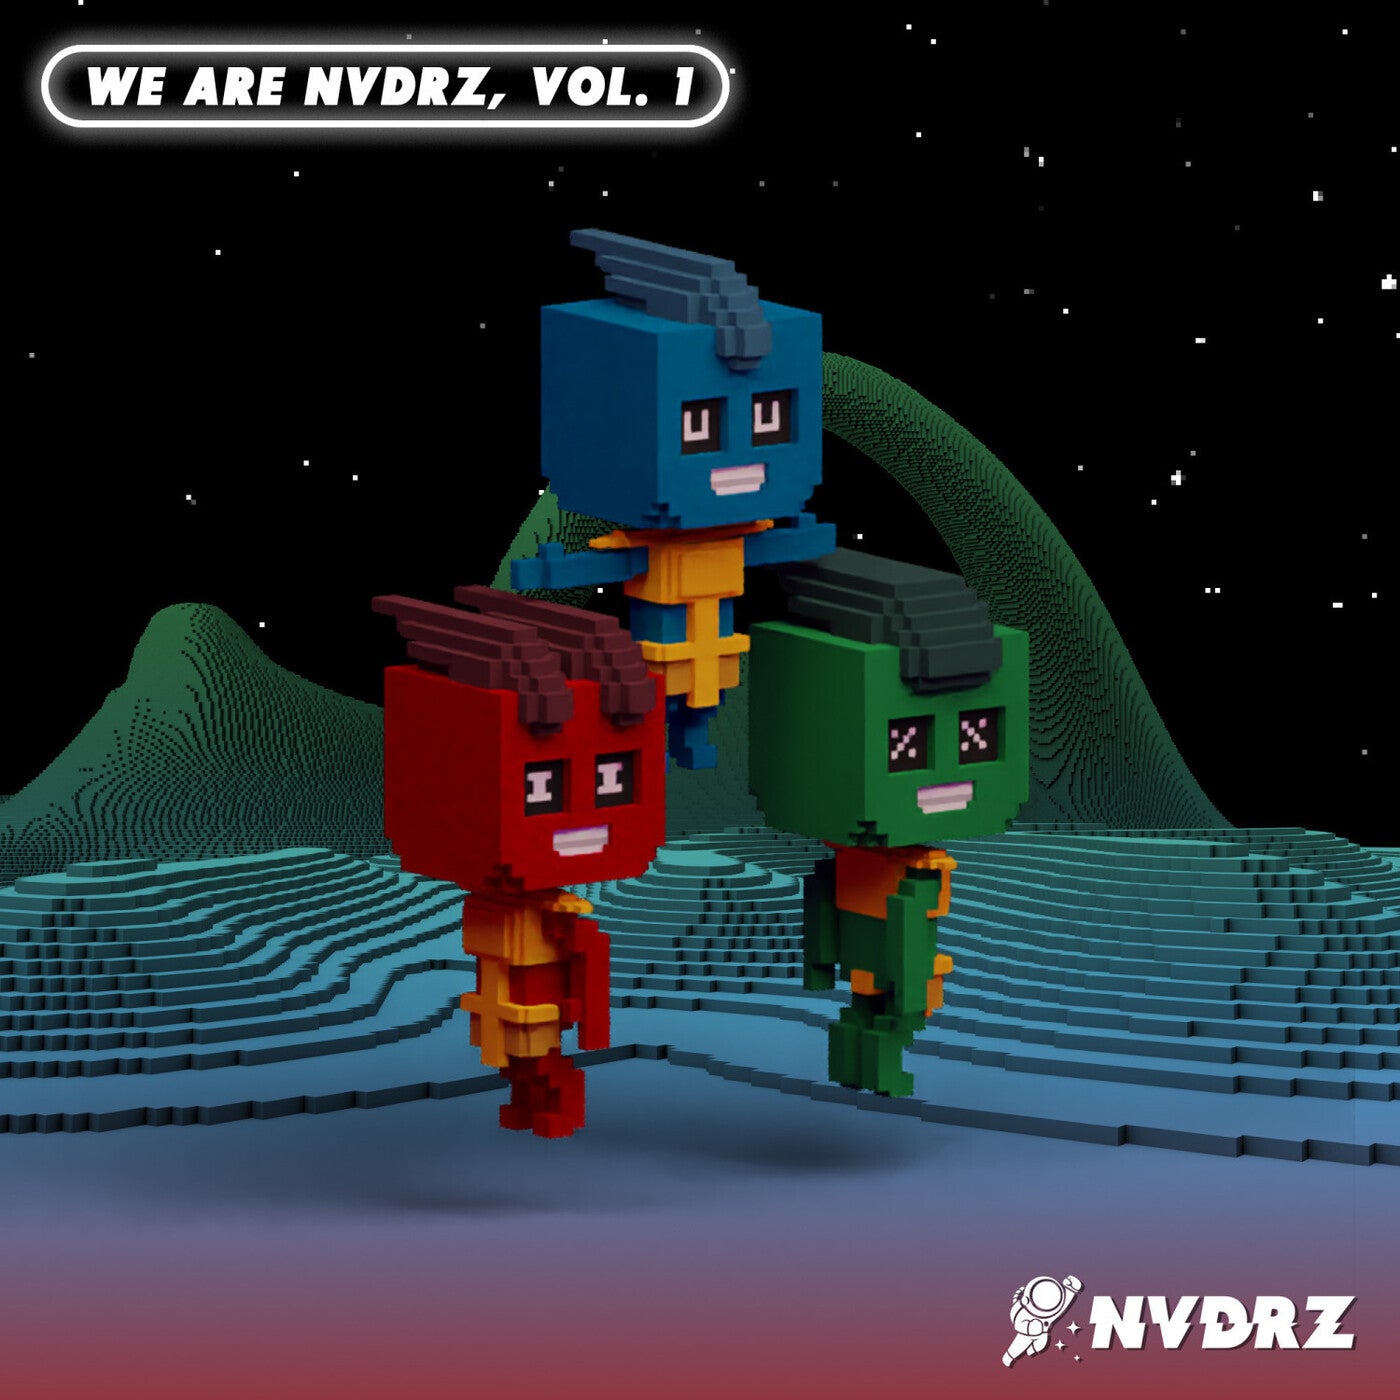 We Are NVDRZ, Vol. 1